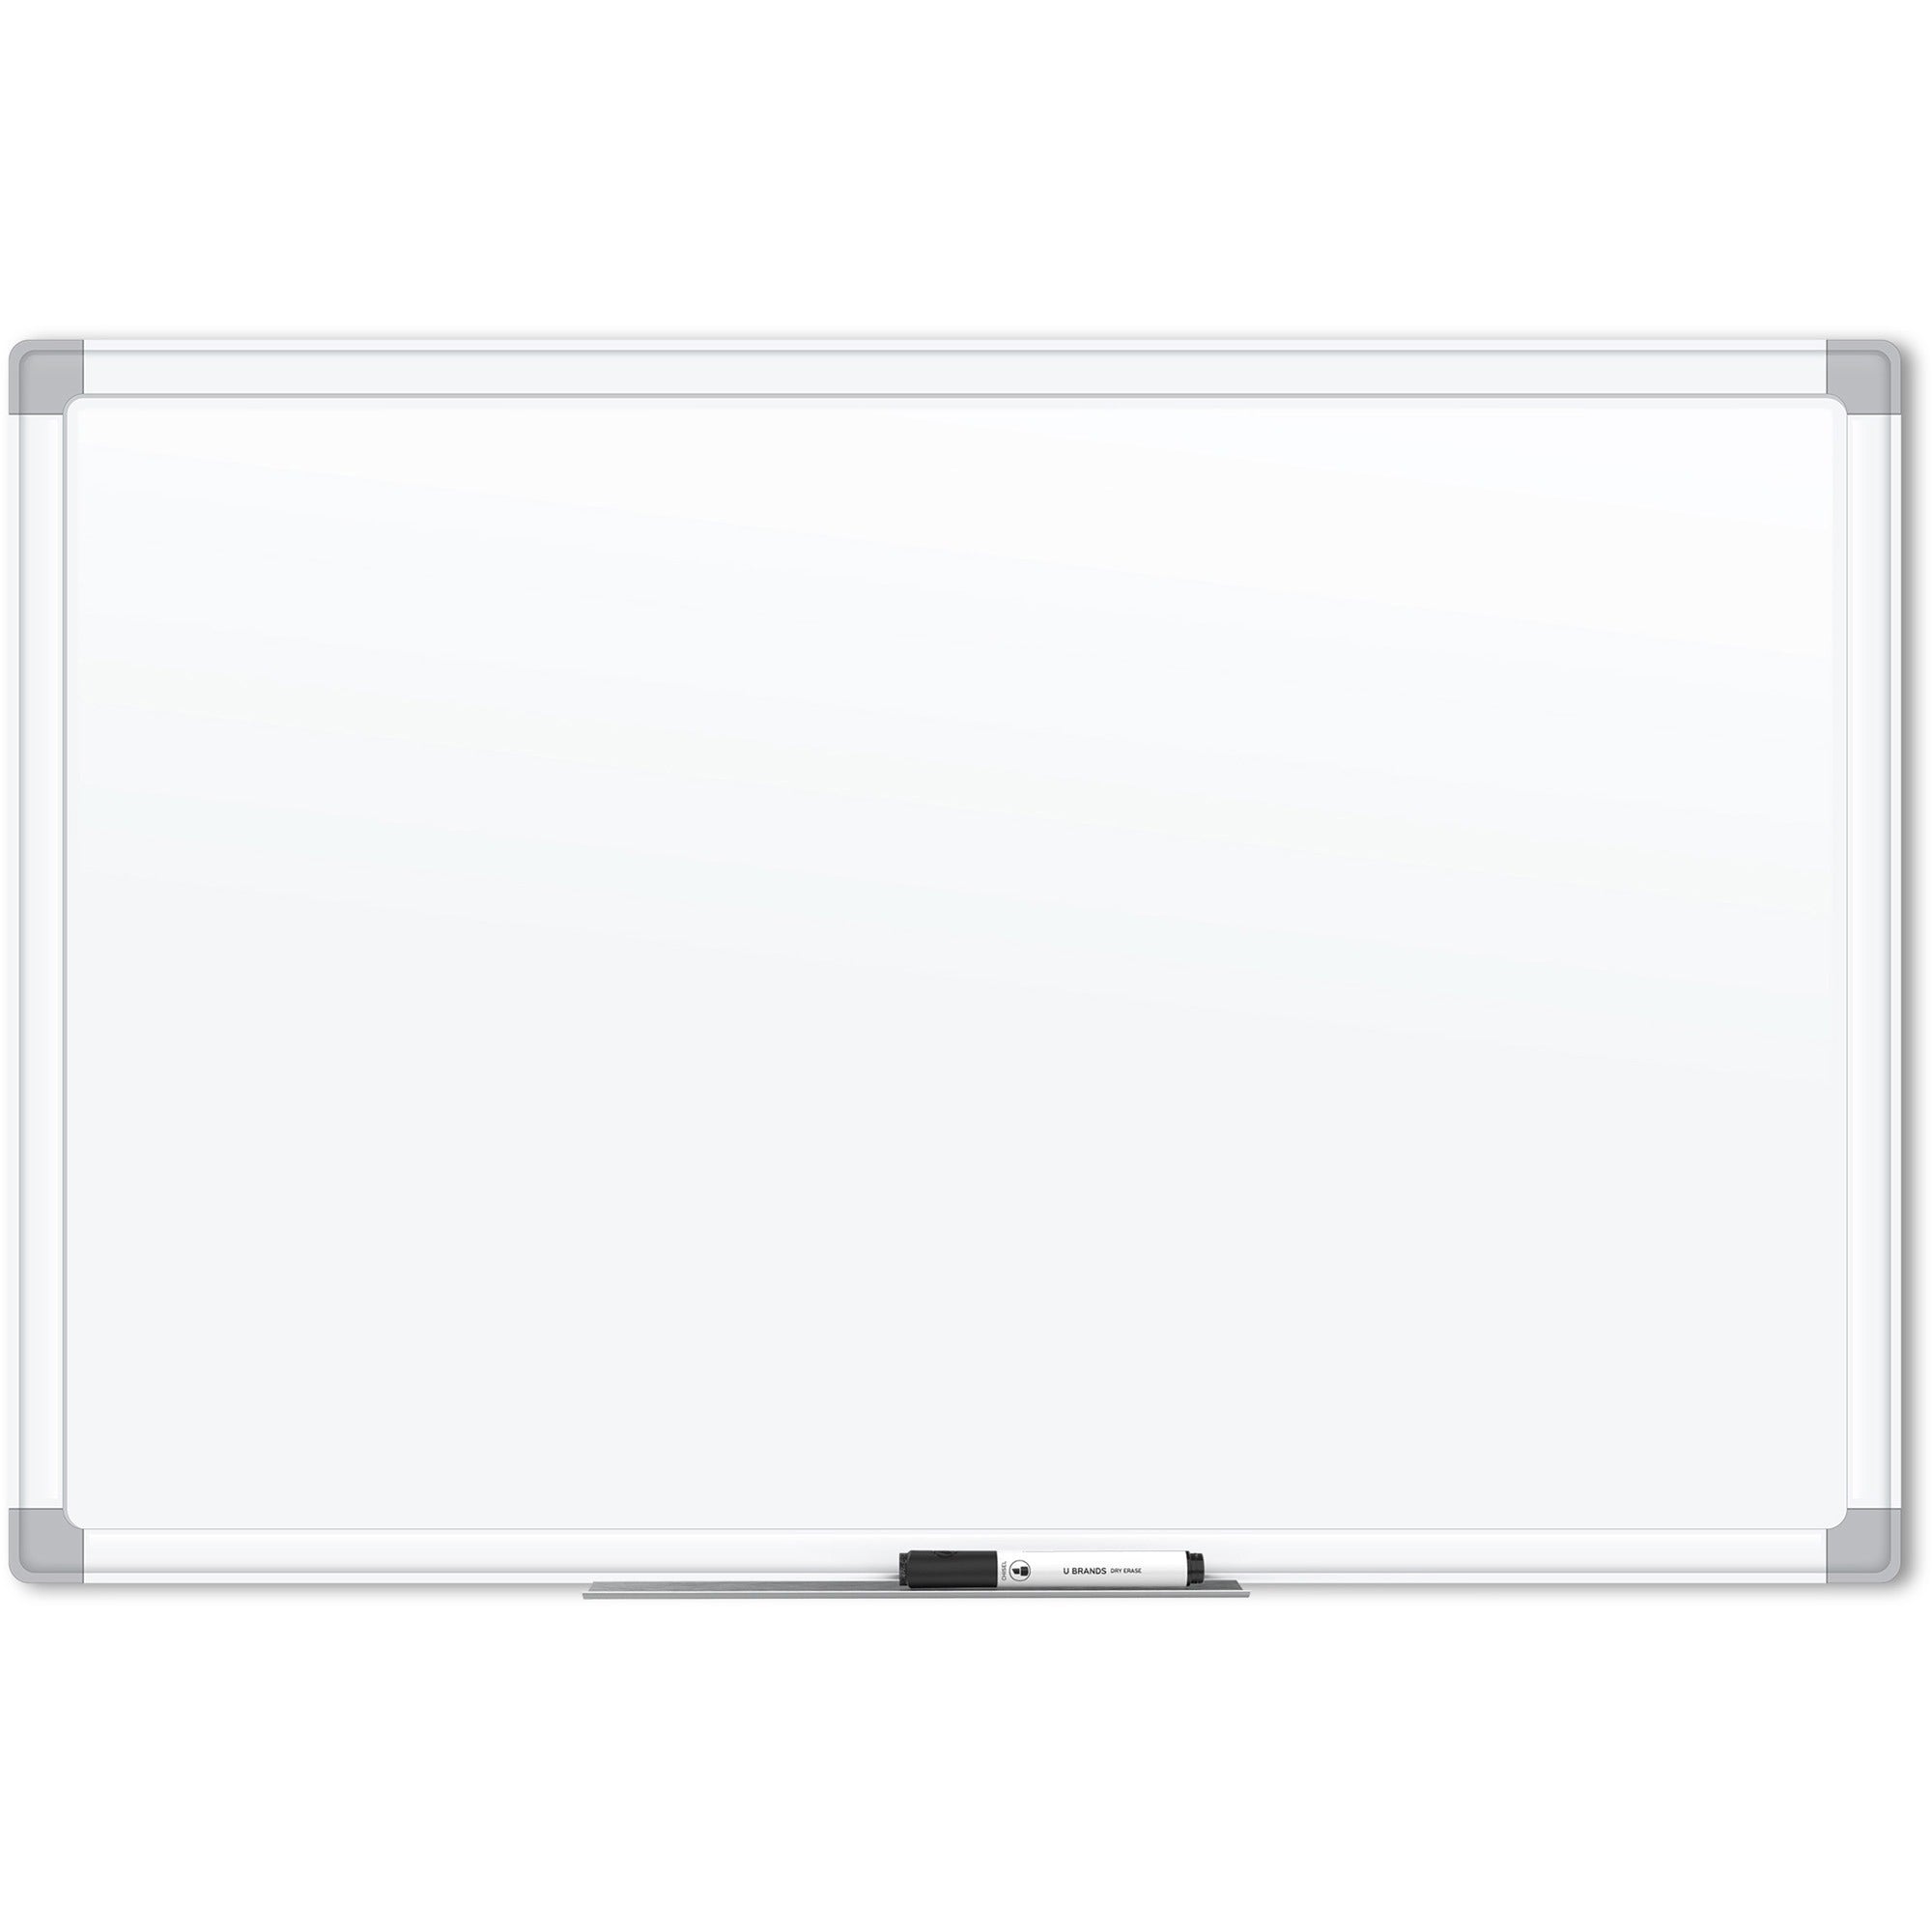 u-brands-white-aluminum-framed-magnetic-porcelain-steel-board-48-x-36-48-4-ft-width-x-36-3-ft-height-white-porcelain-steel-surface-white-aluminum-frame-rectangle-horizontal-vertical-1_ubr4900u0001 - 1